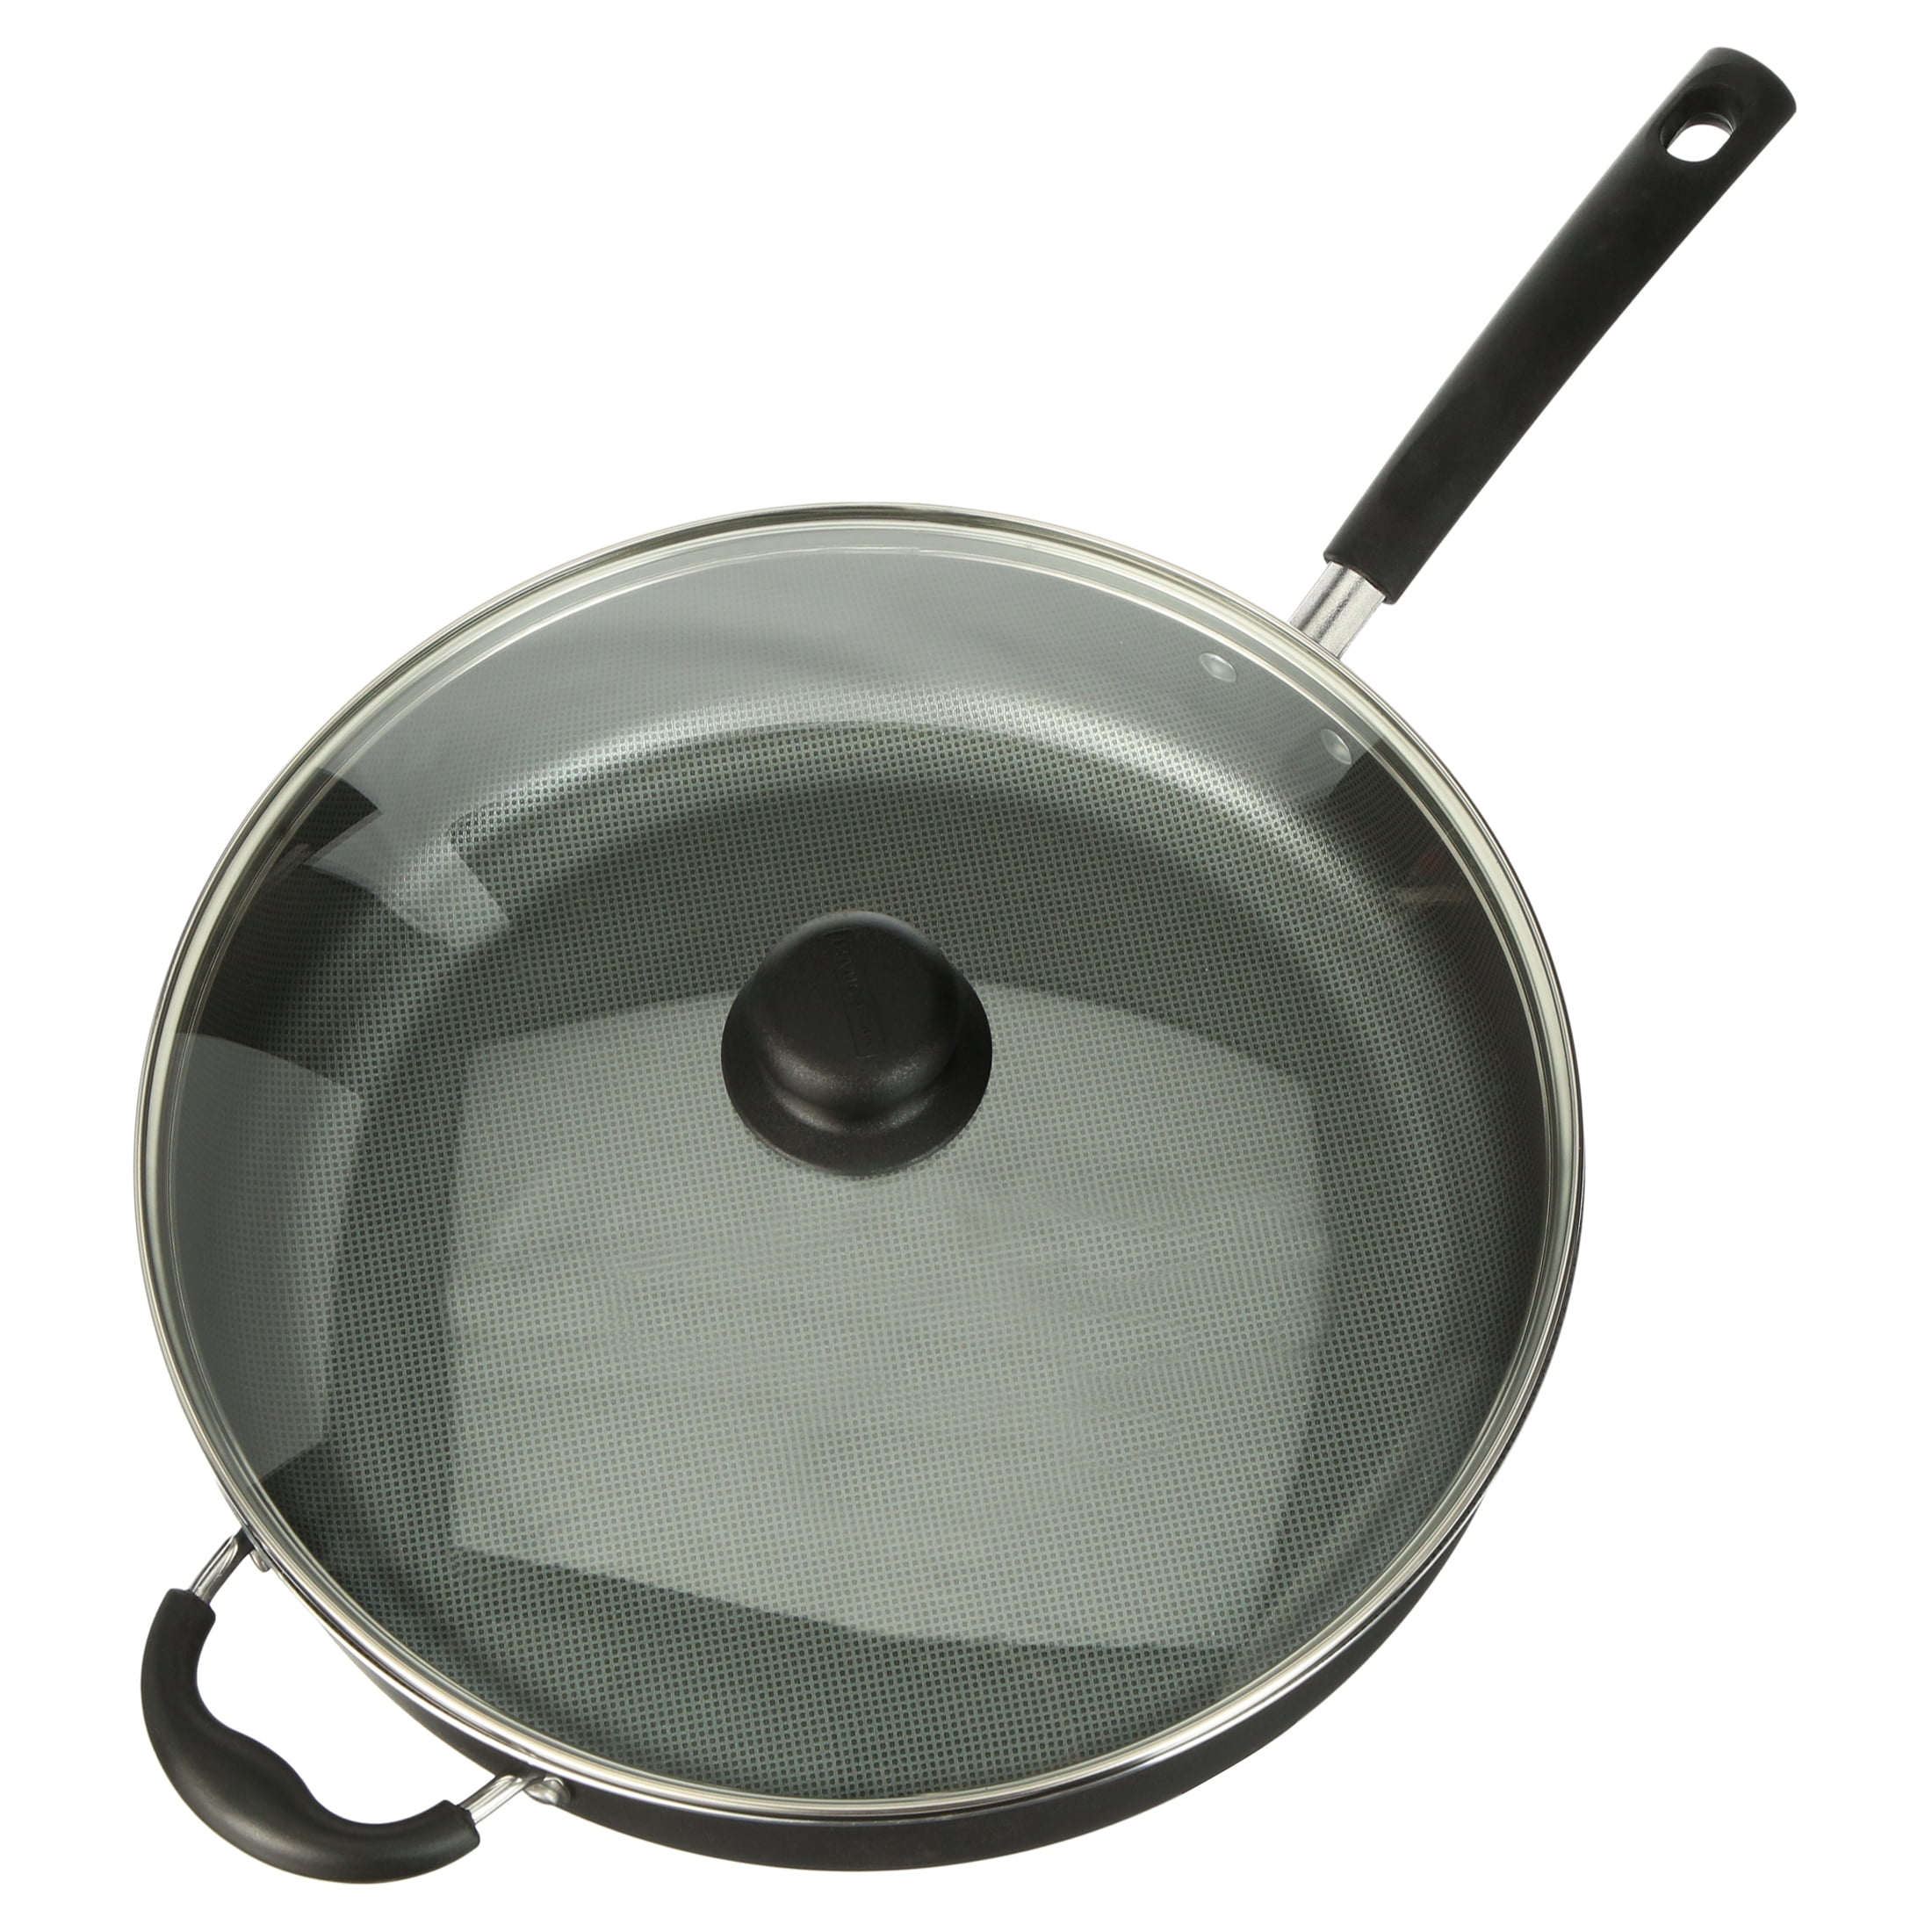 Sale Jumbo 5 Quart Non Stick Frying Cooker Pan Skillet Fry Saute Covered lid